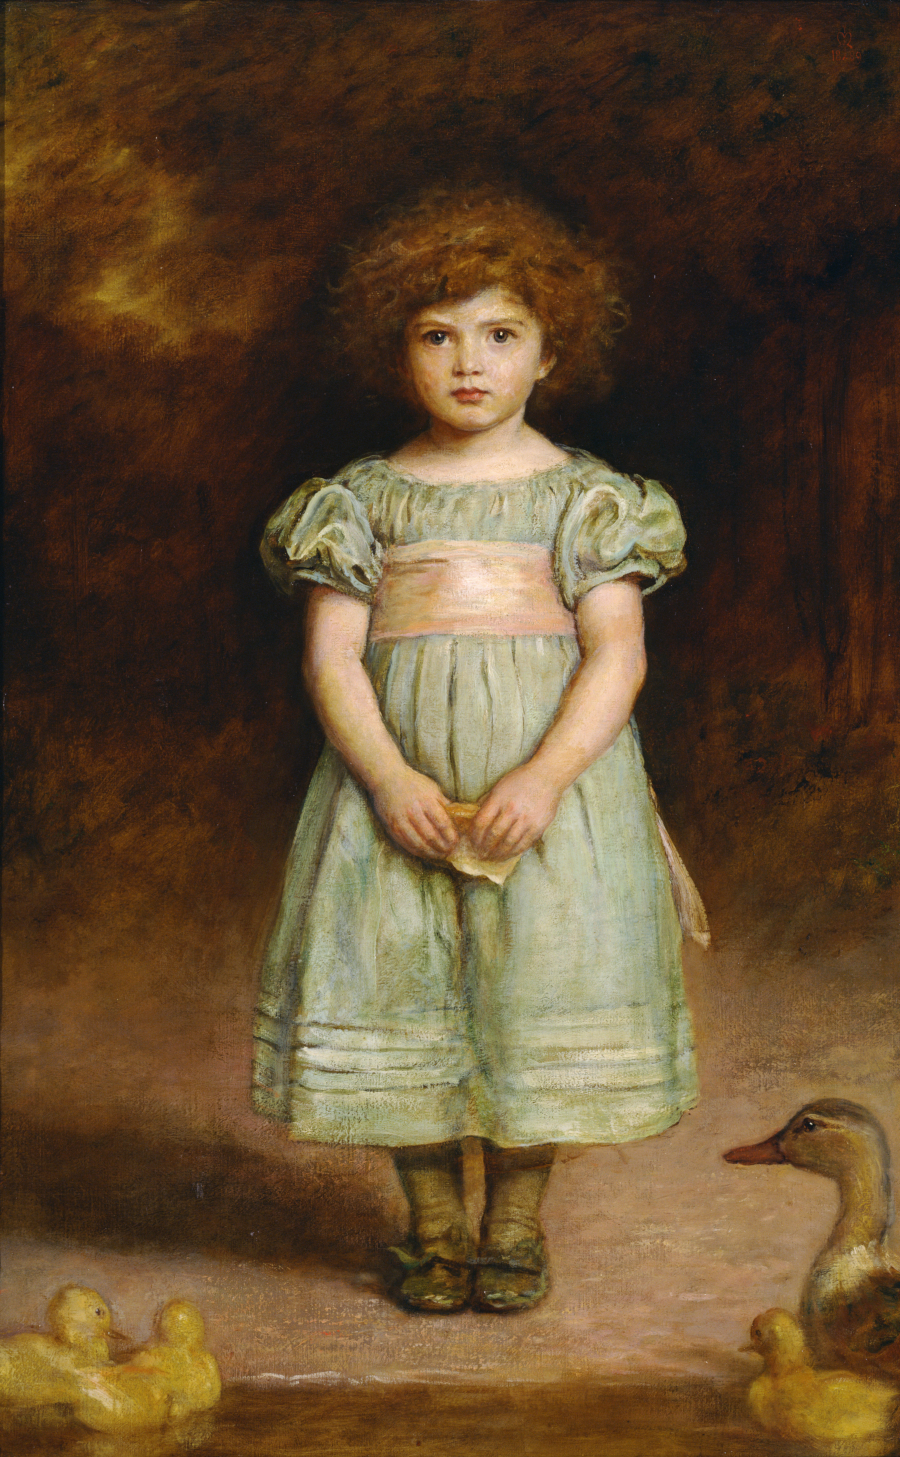 image: John Everett Millais